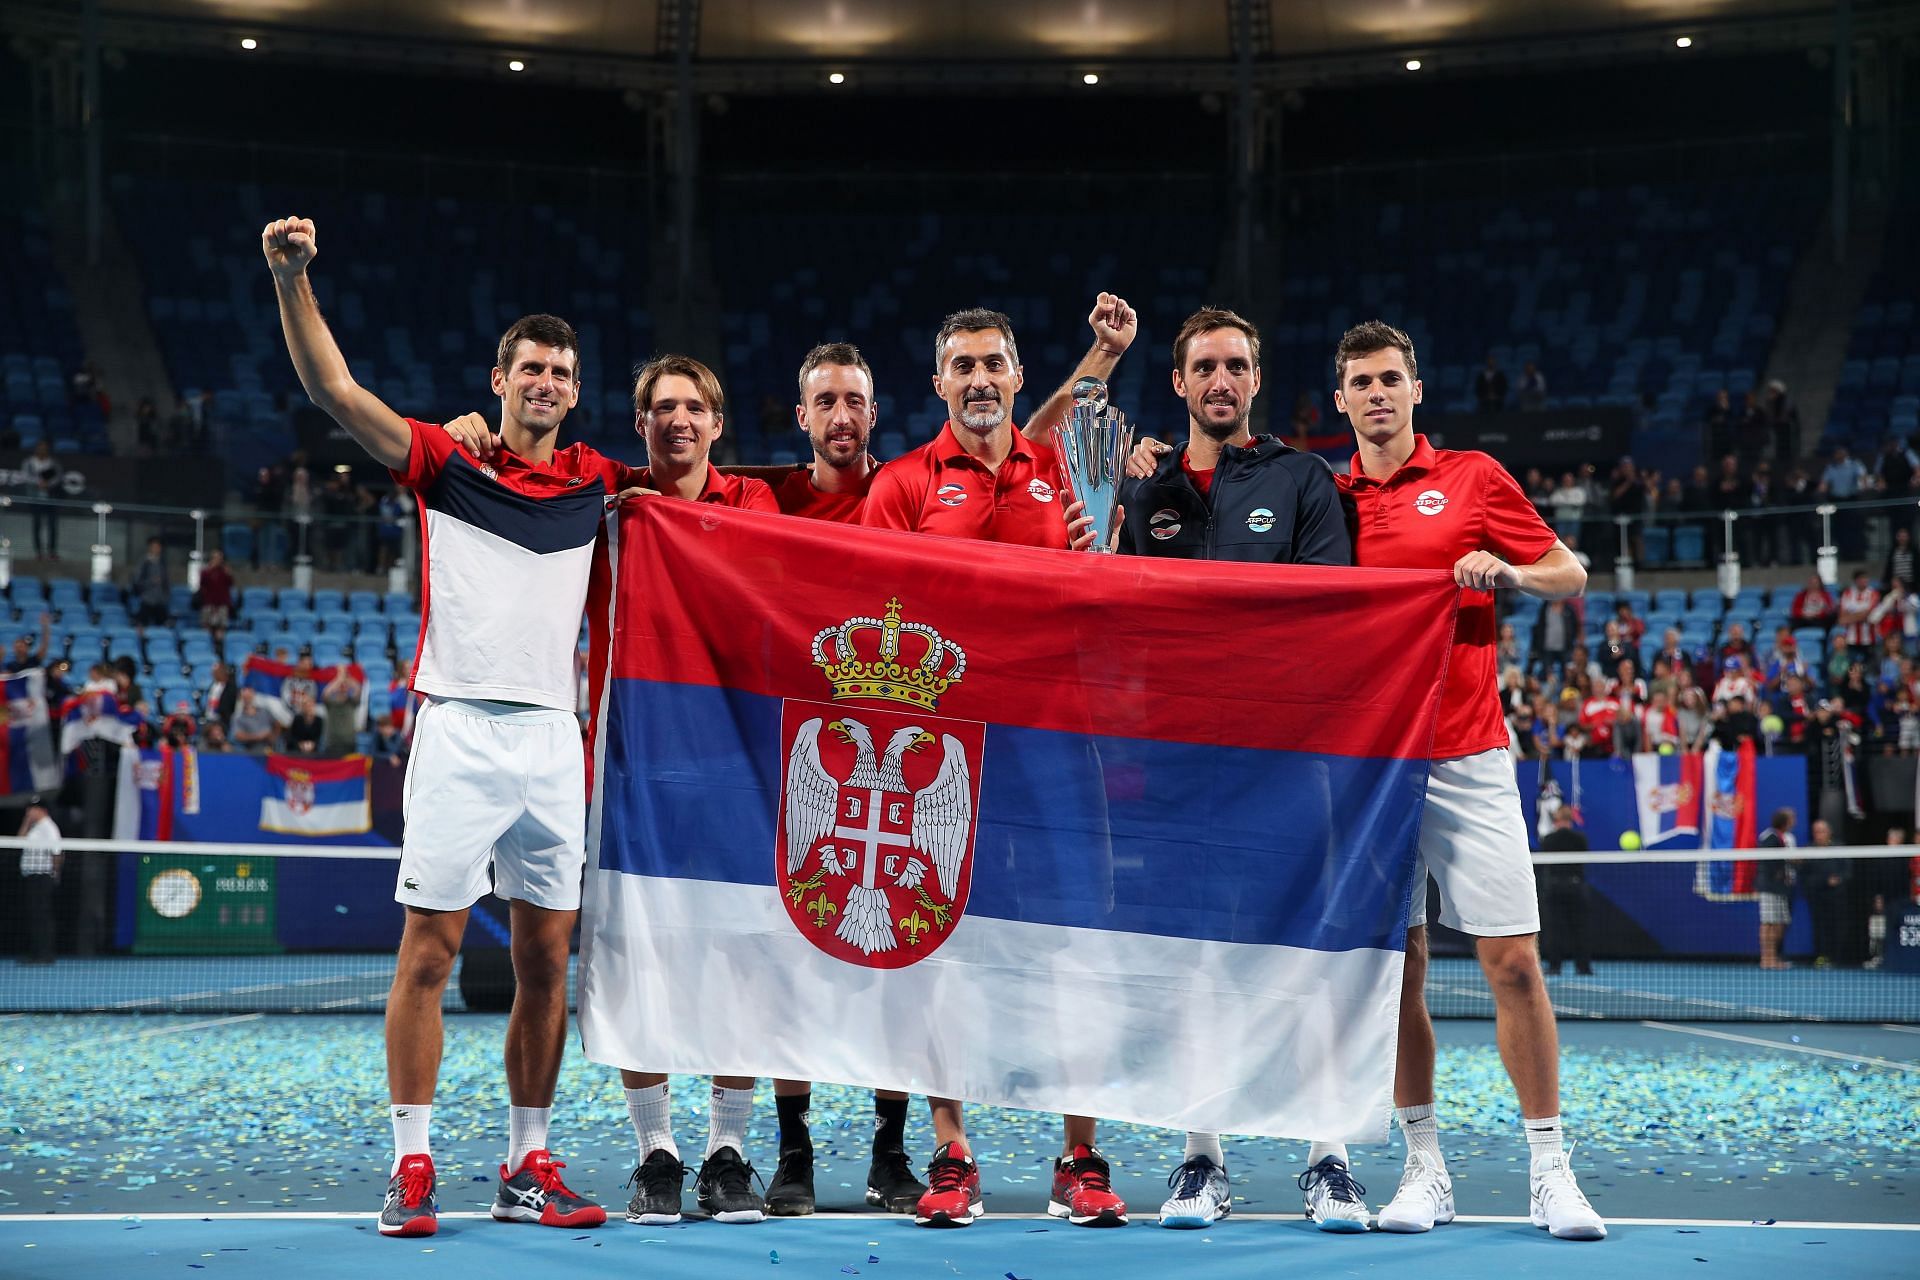 Srdjan Djokovic felt that an attack on Novak Djokovic was an attack on all of Serbia